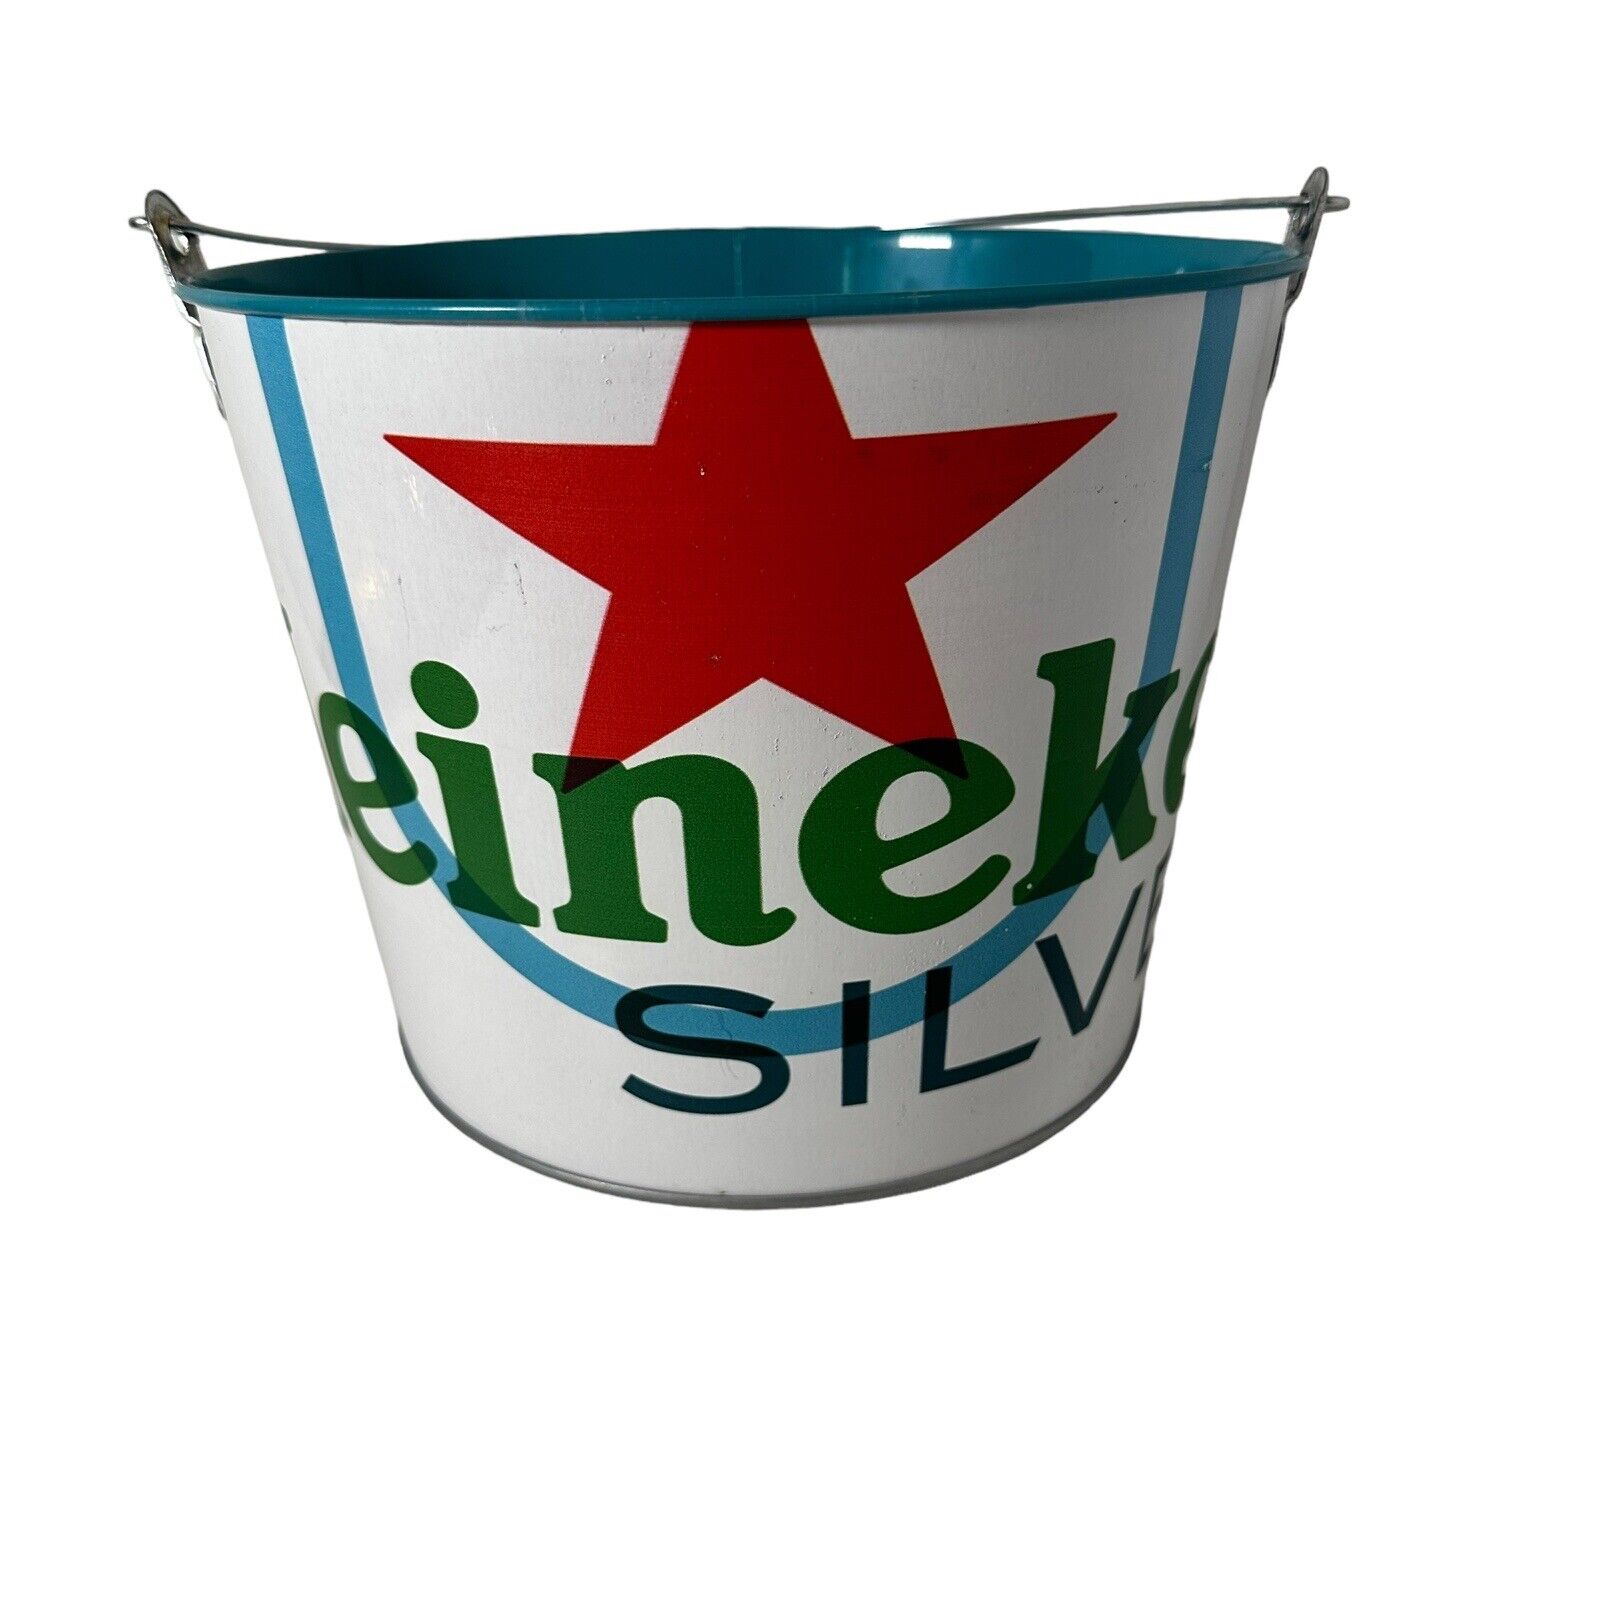 Heineken Silver Beer Metal Pail Ice Bucket With Handle Red Star JUST DROPPED